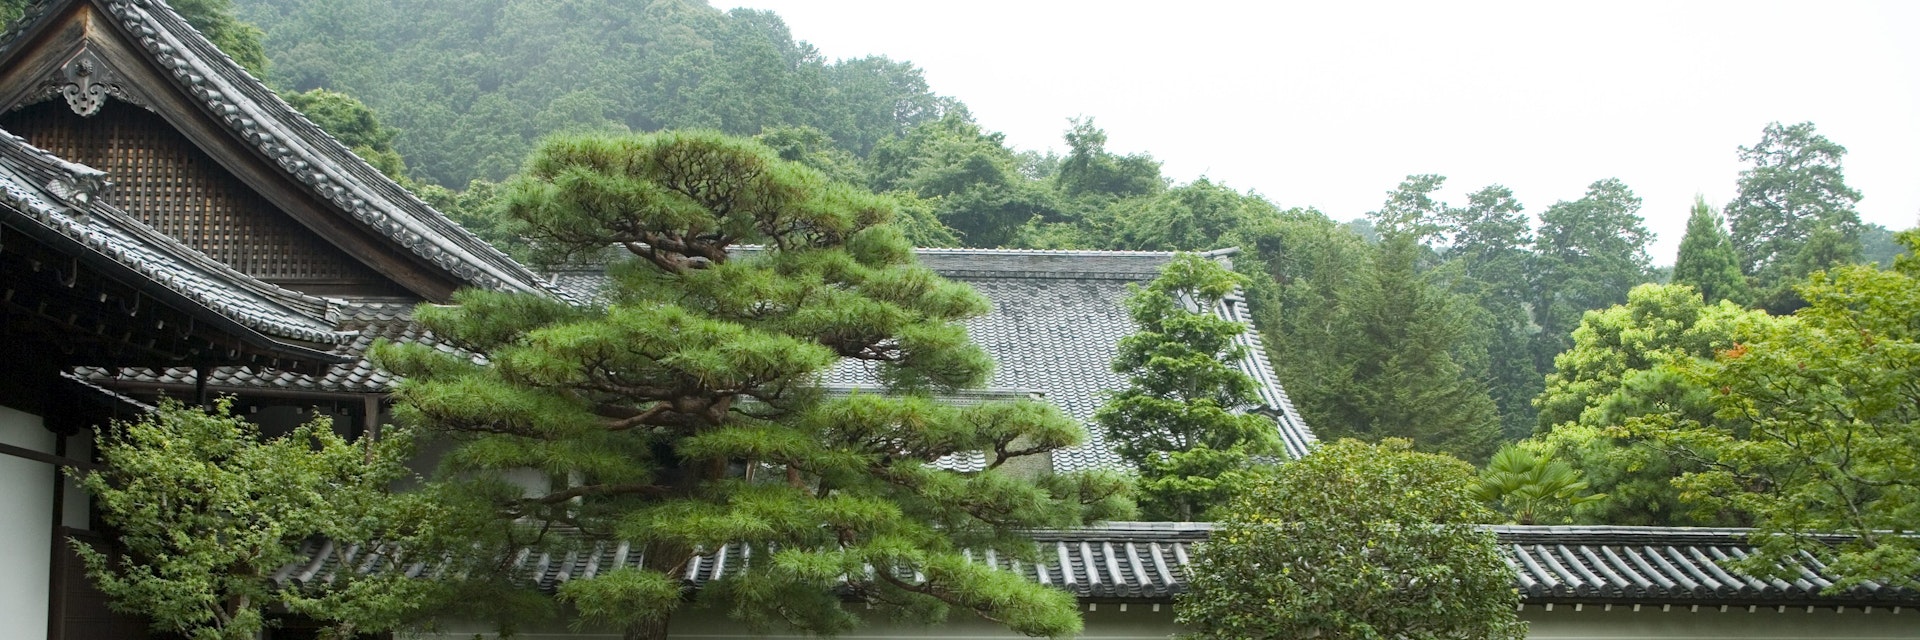 Leaping Tiger Garden at Nanzen-ji Temple.